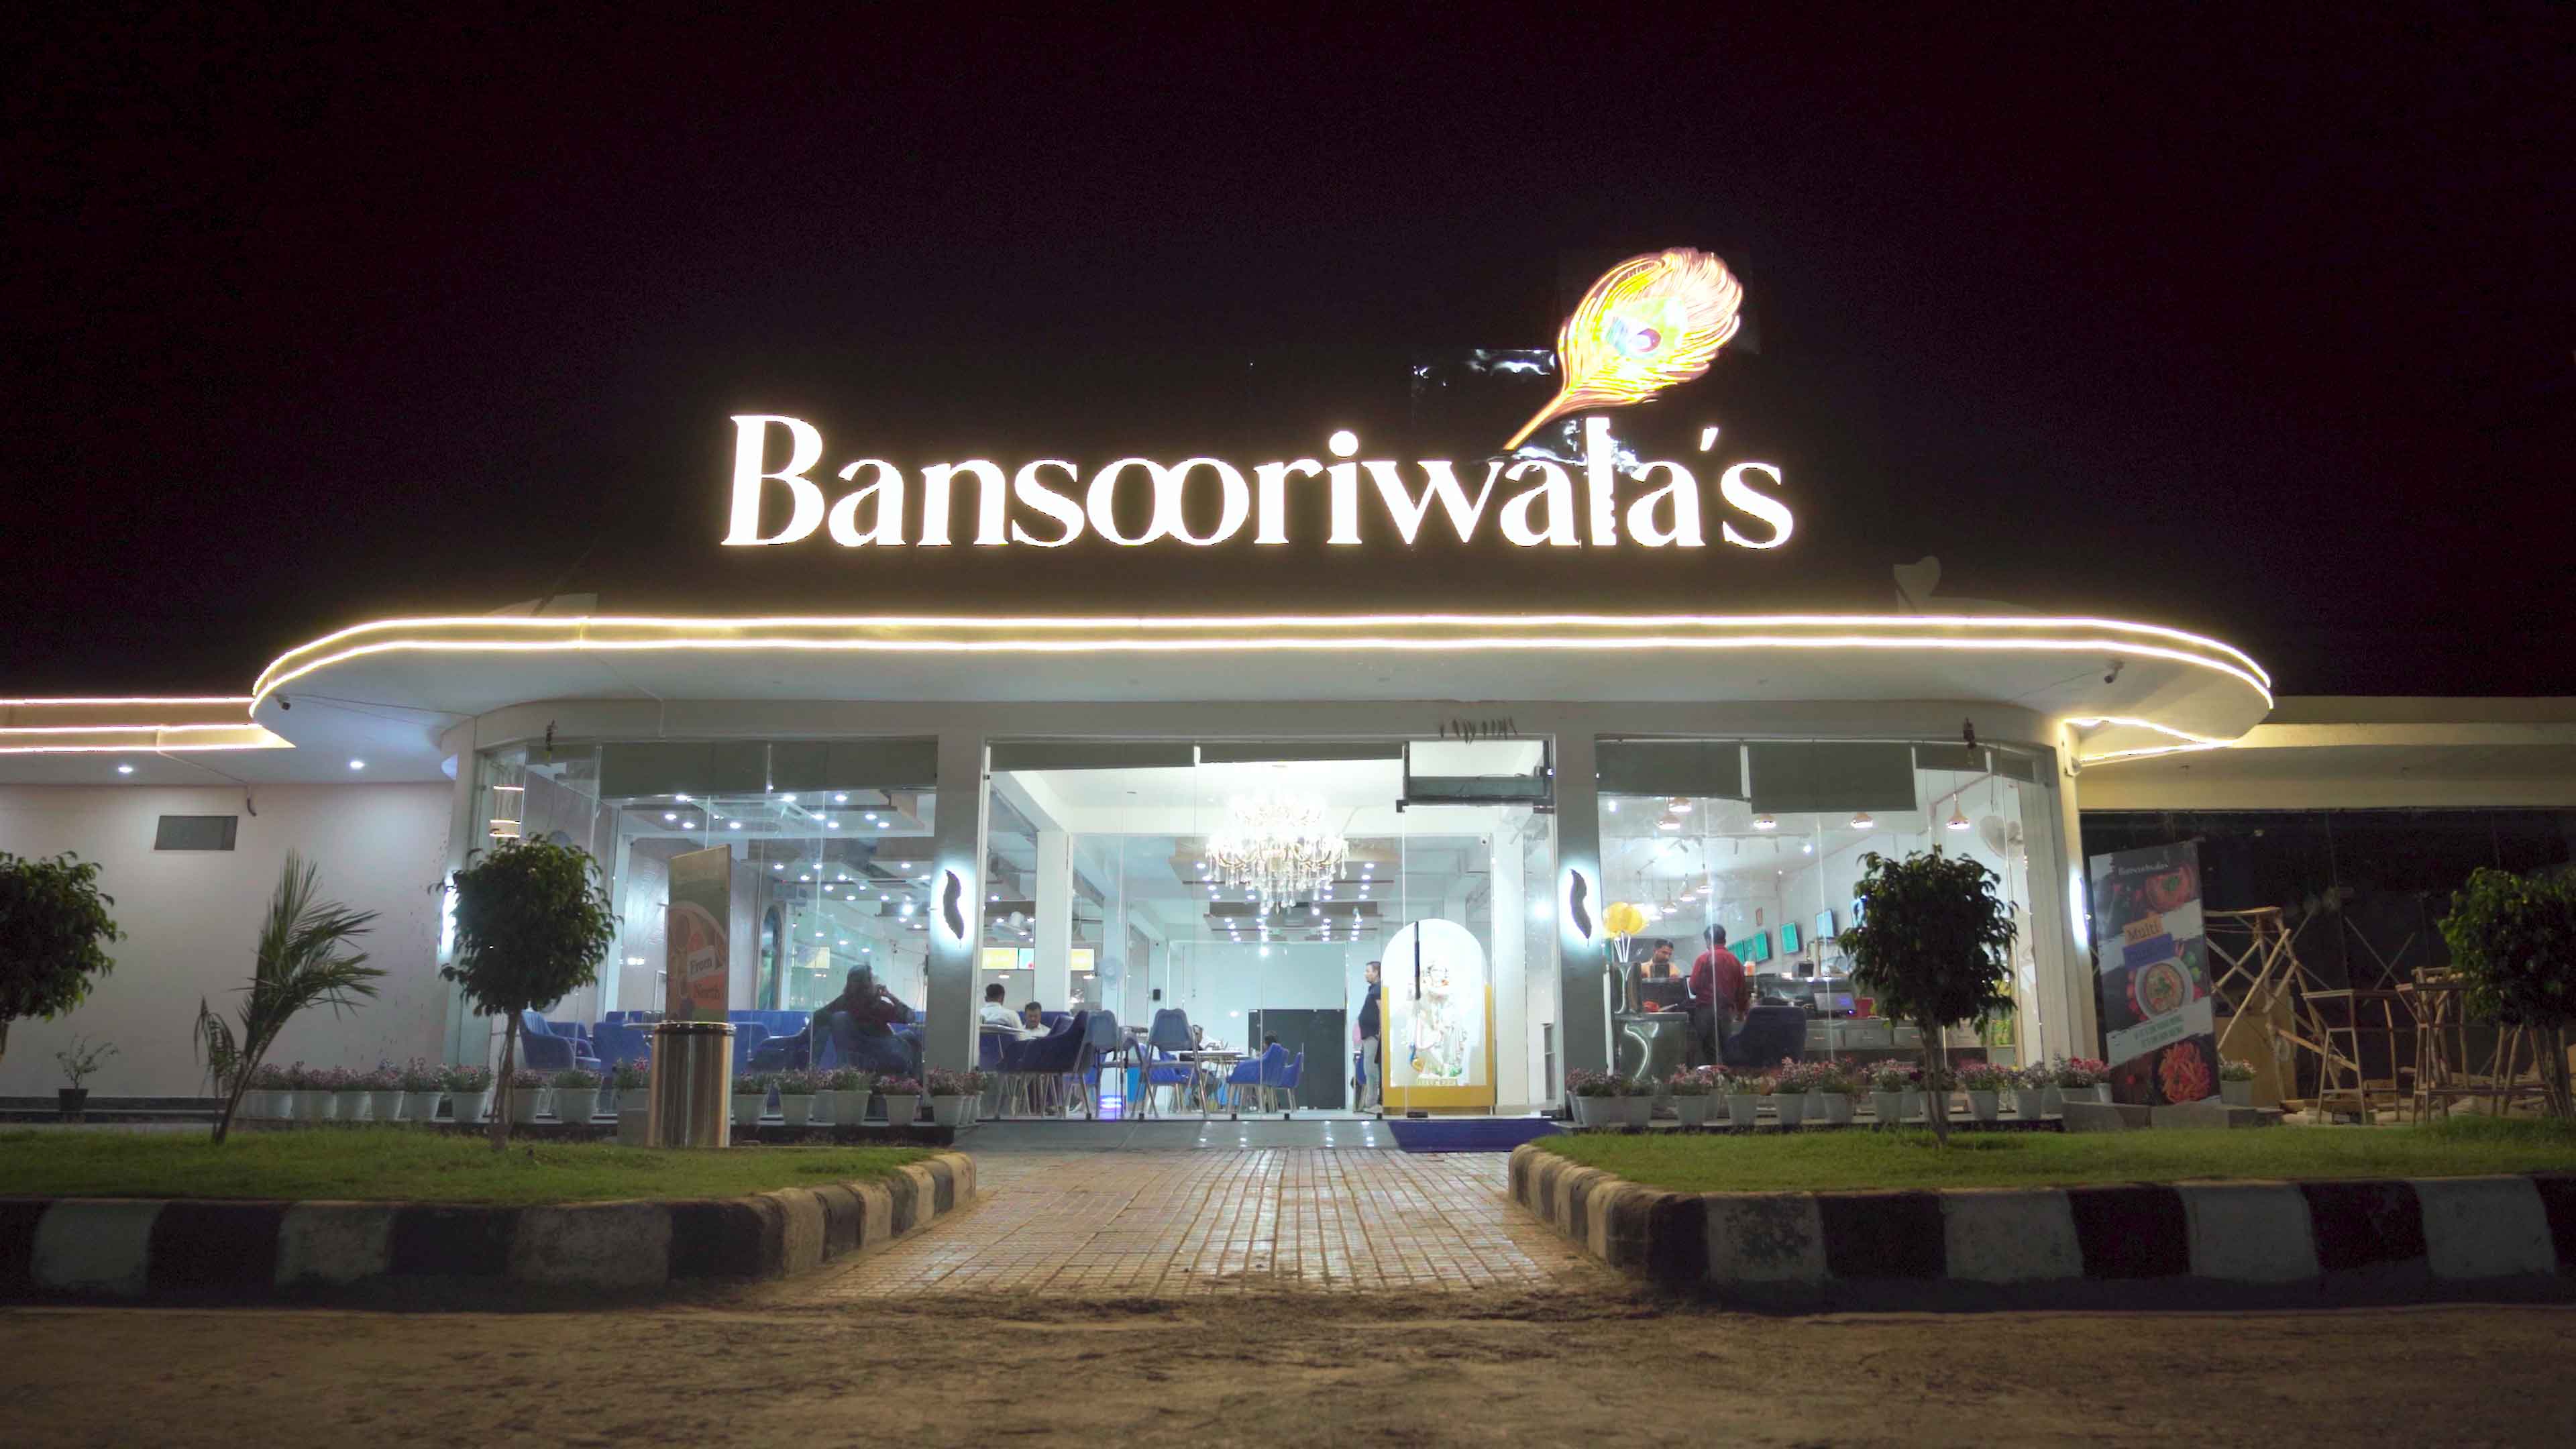 Bansooriwala's, the Indian family restaurant